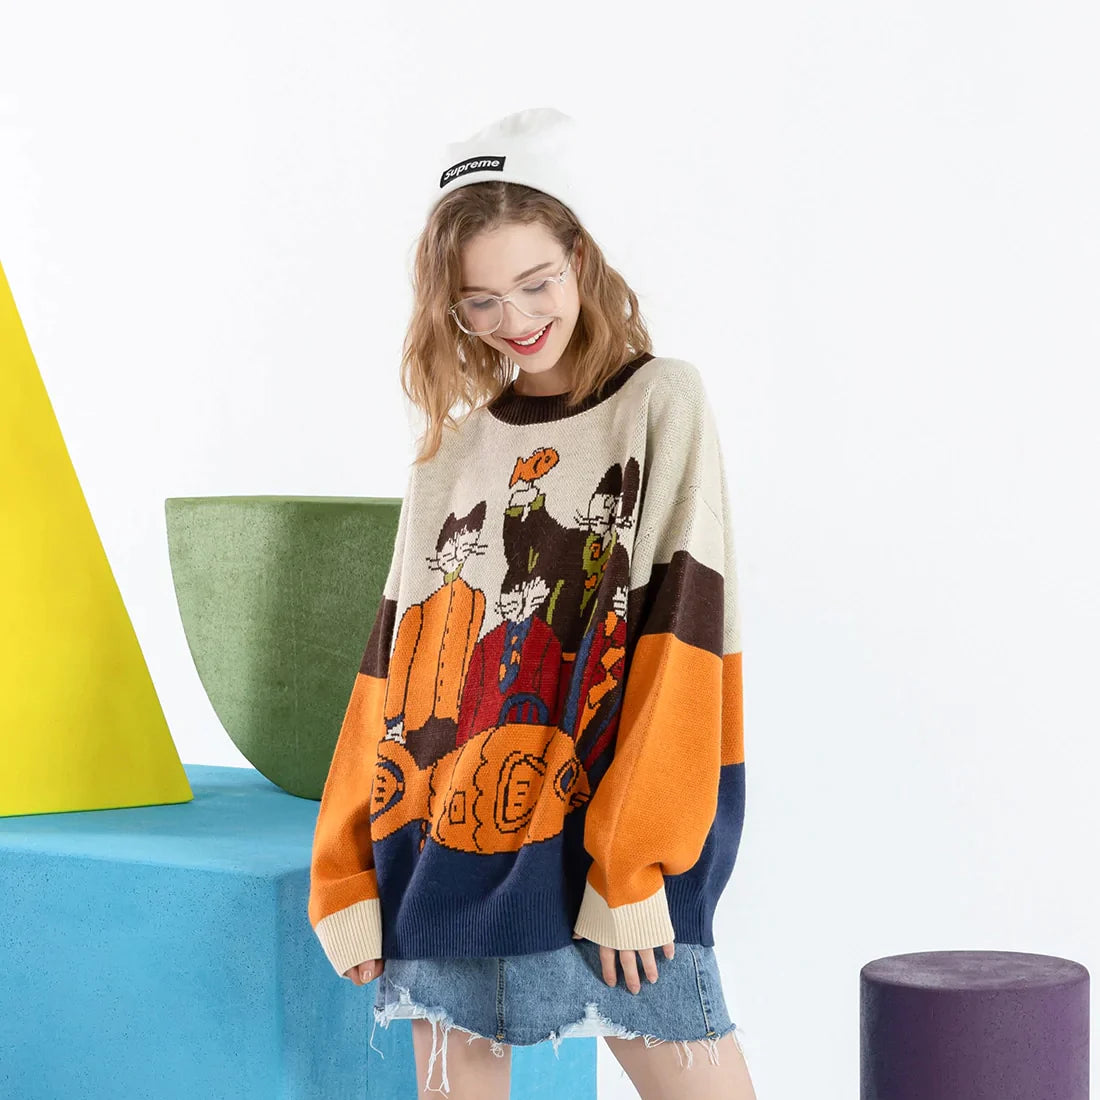  Reunion Cat Sweater sold by Fleurlovin, Free Shipping Worldwide